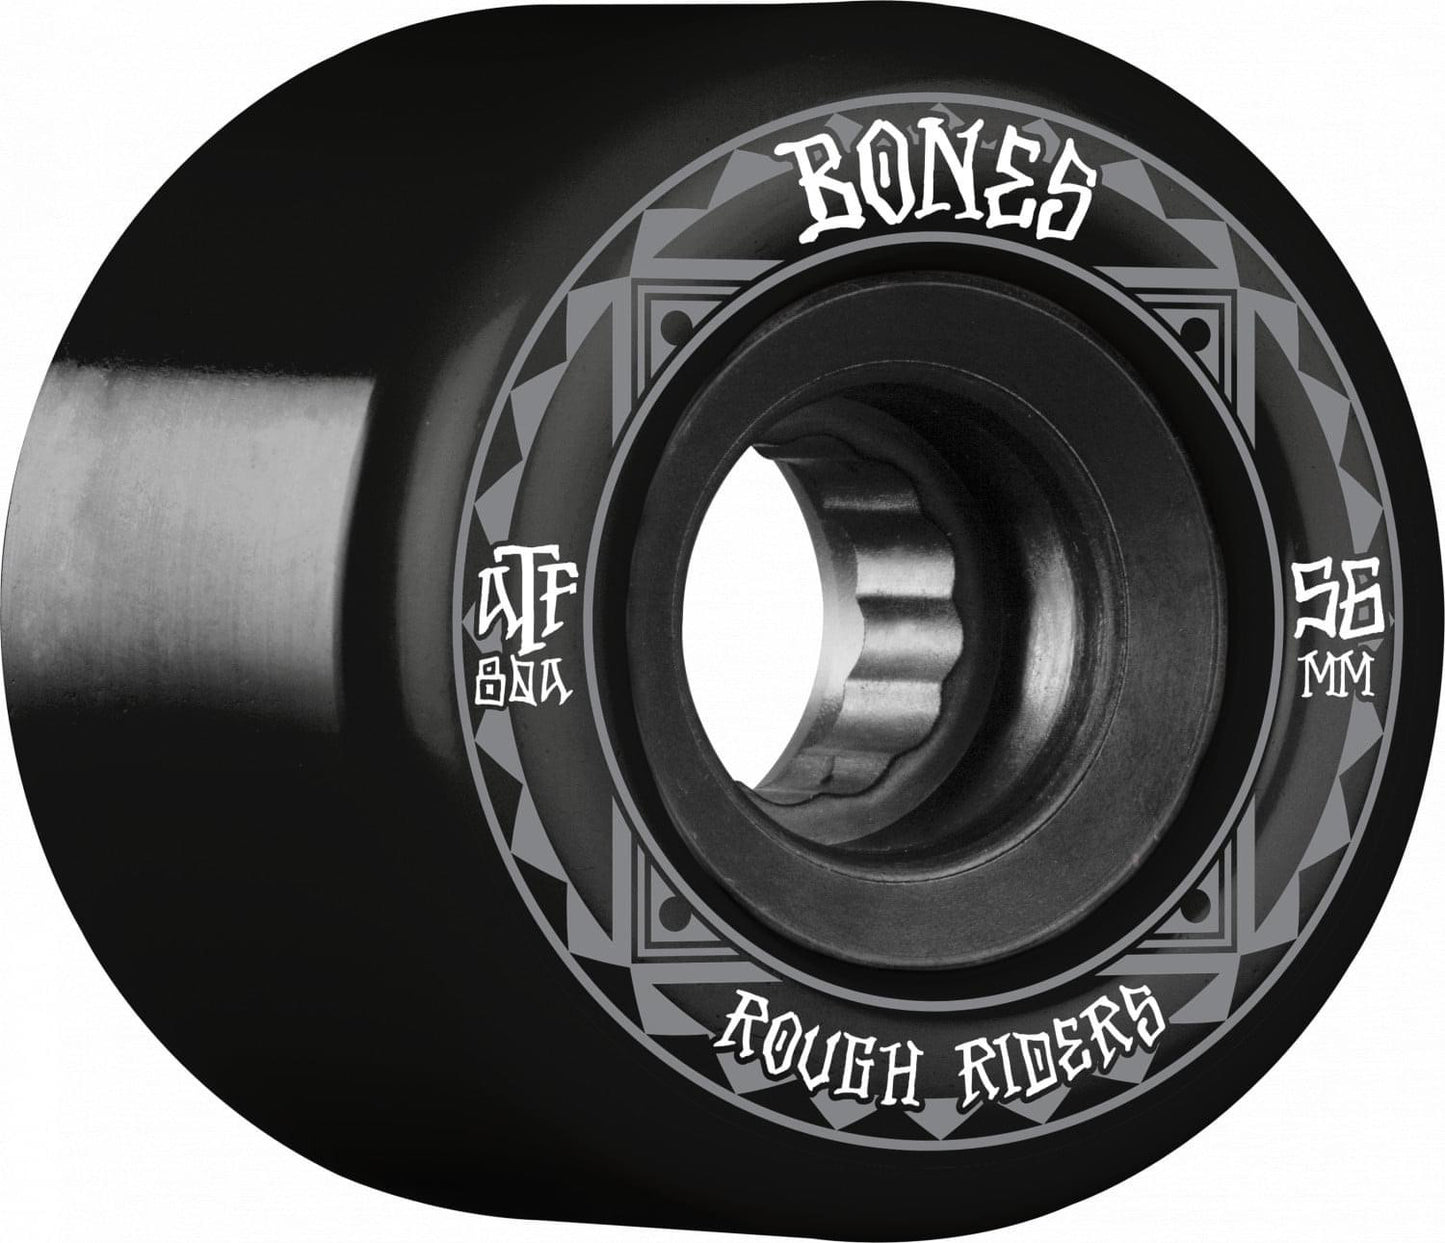 Bones skateboard wheels Rough riders ATF 4 pack 56mm 80a